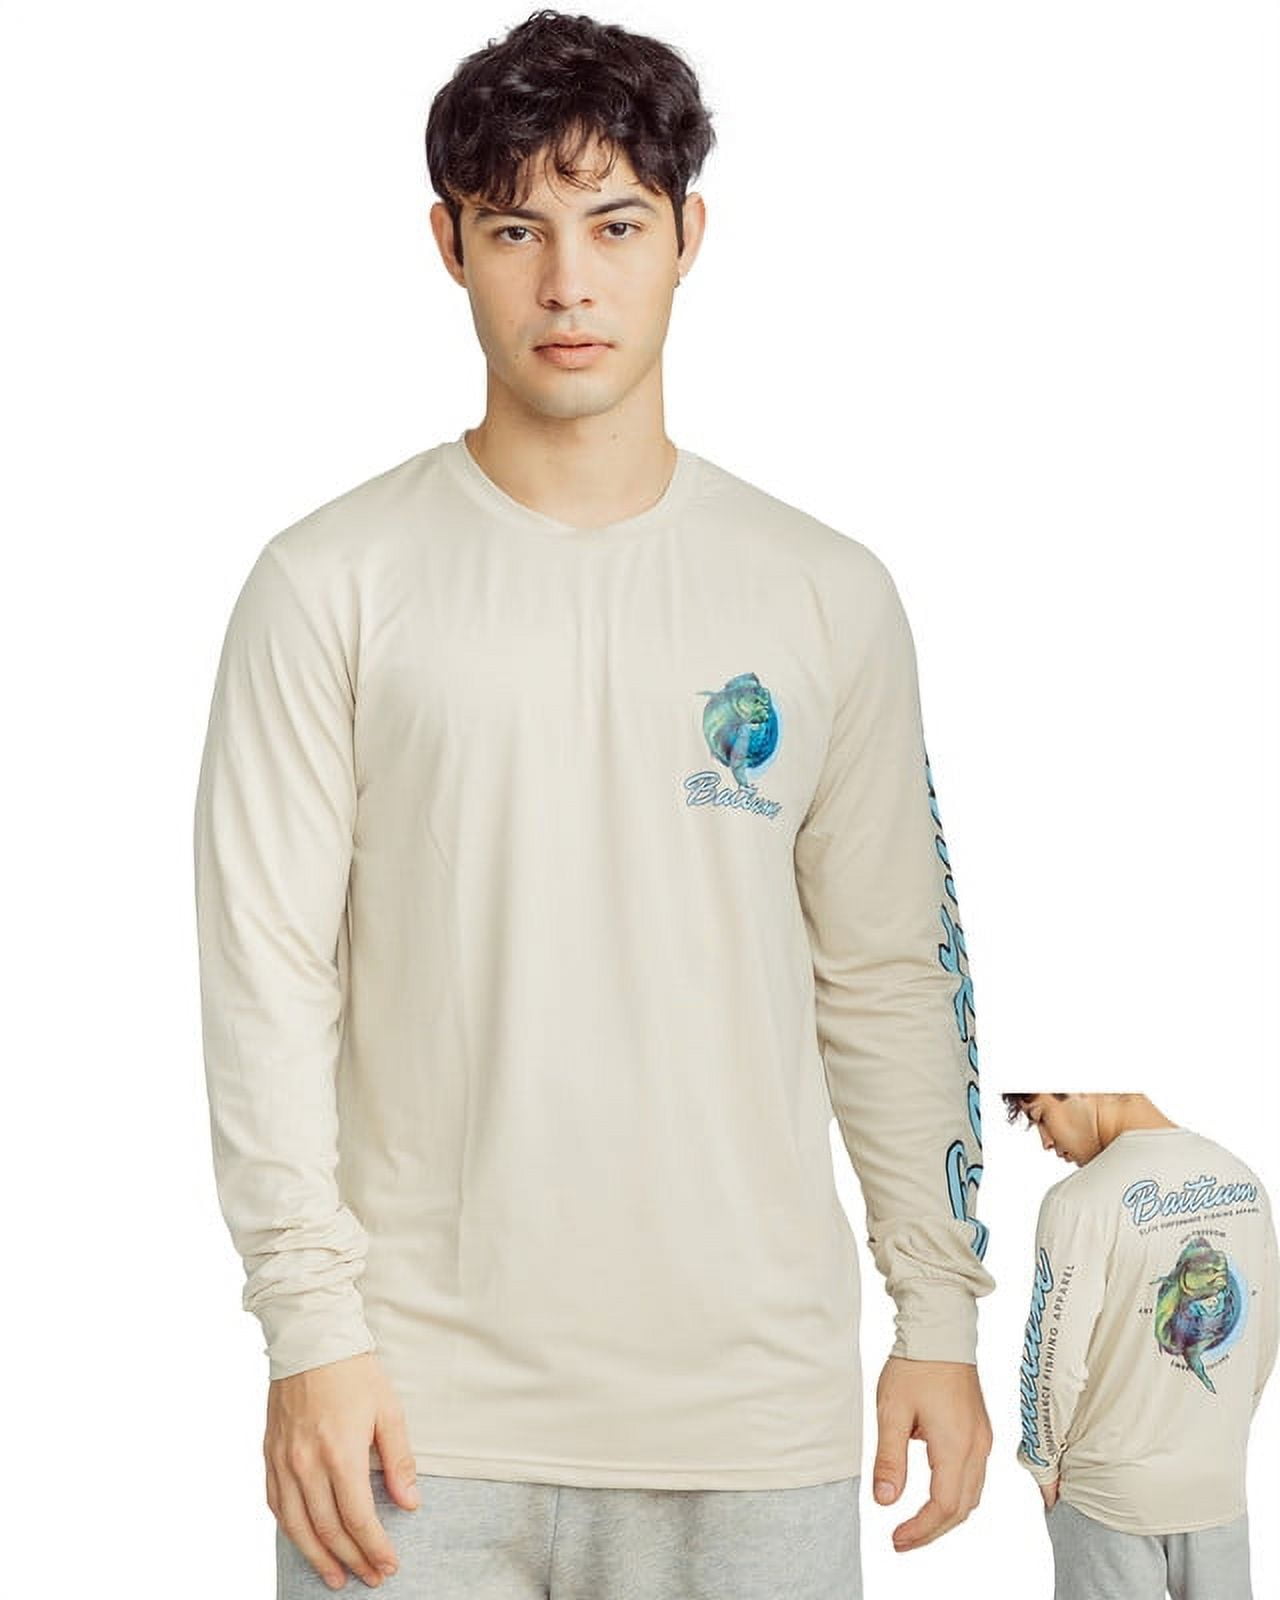 Baitium Fishing Shirt for Men Outdoor Long Sleeve Fishing Shirt Hiking  Running Sun Shirt Rash Guard UPF 50+